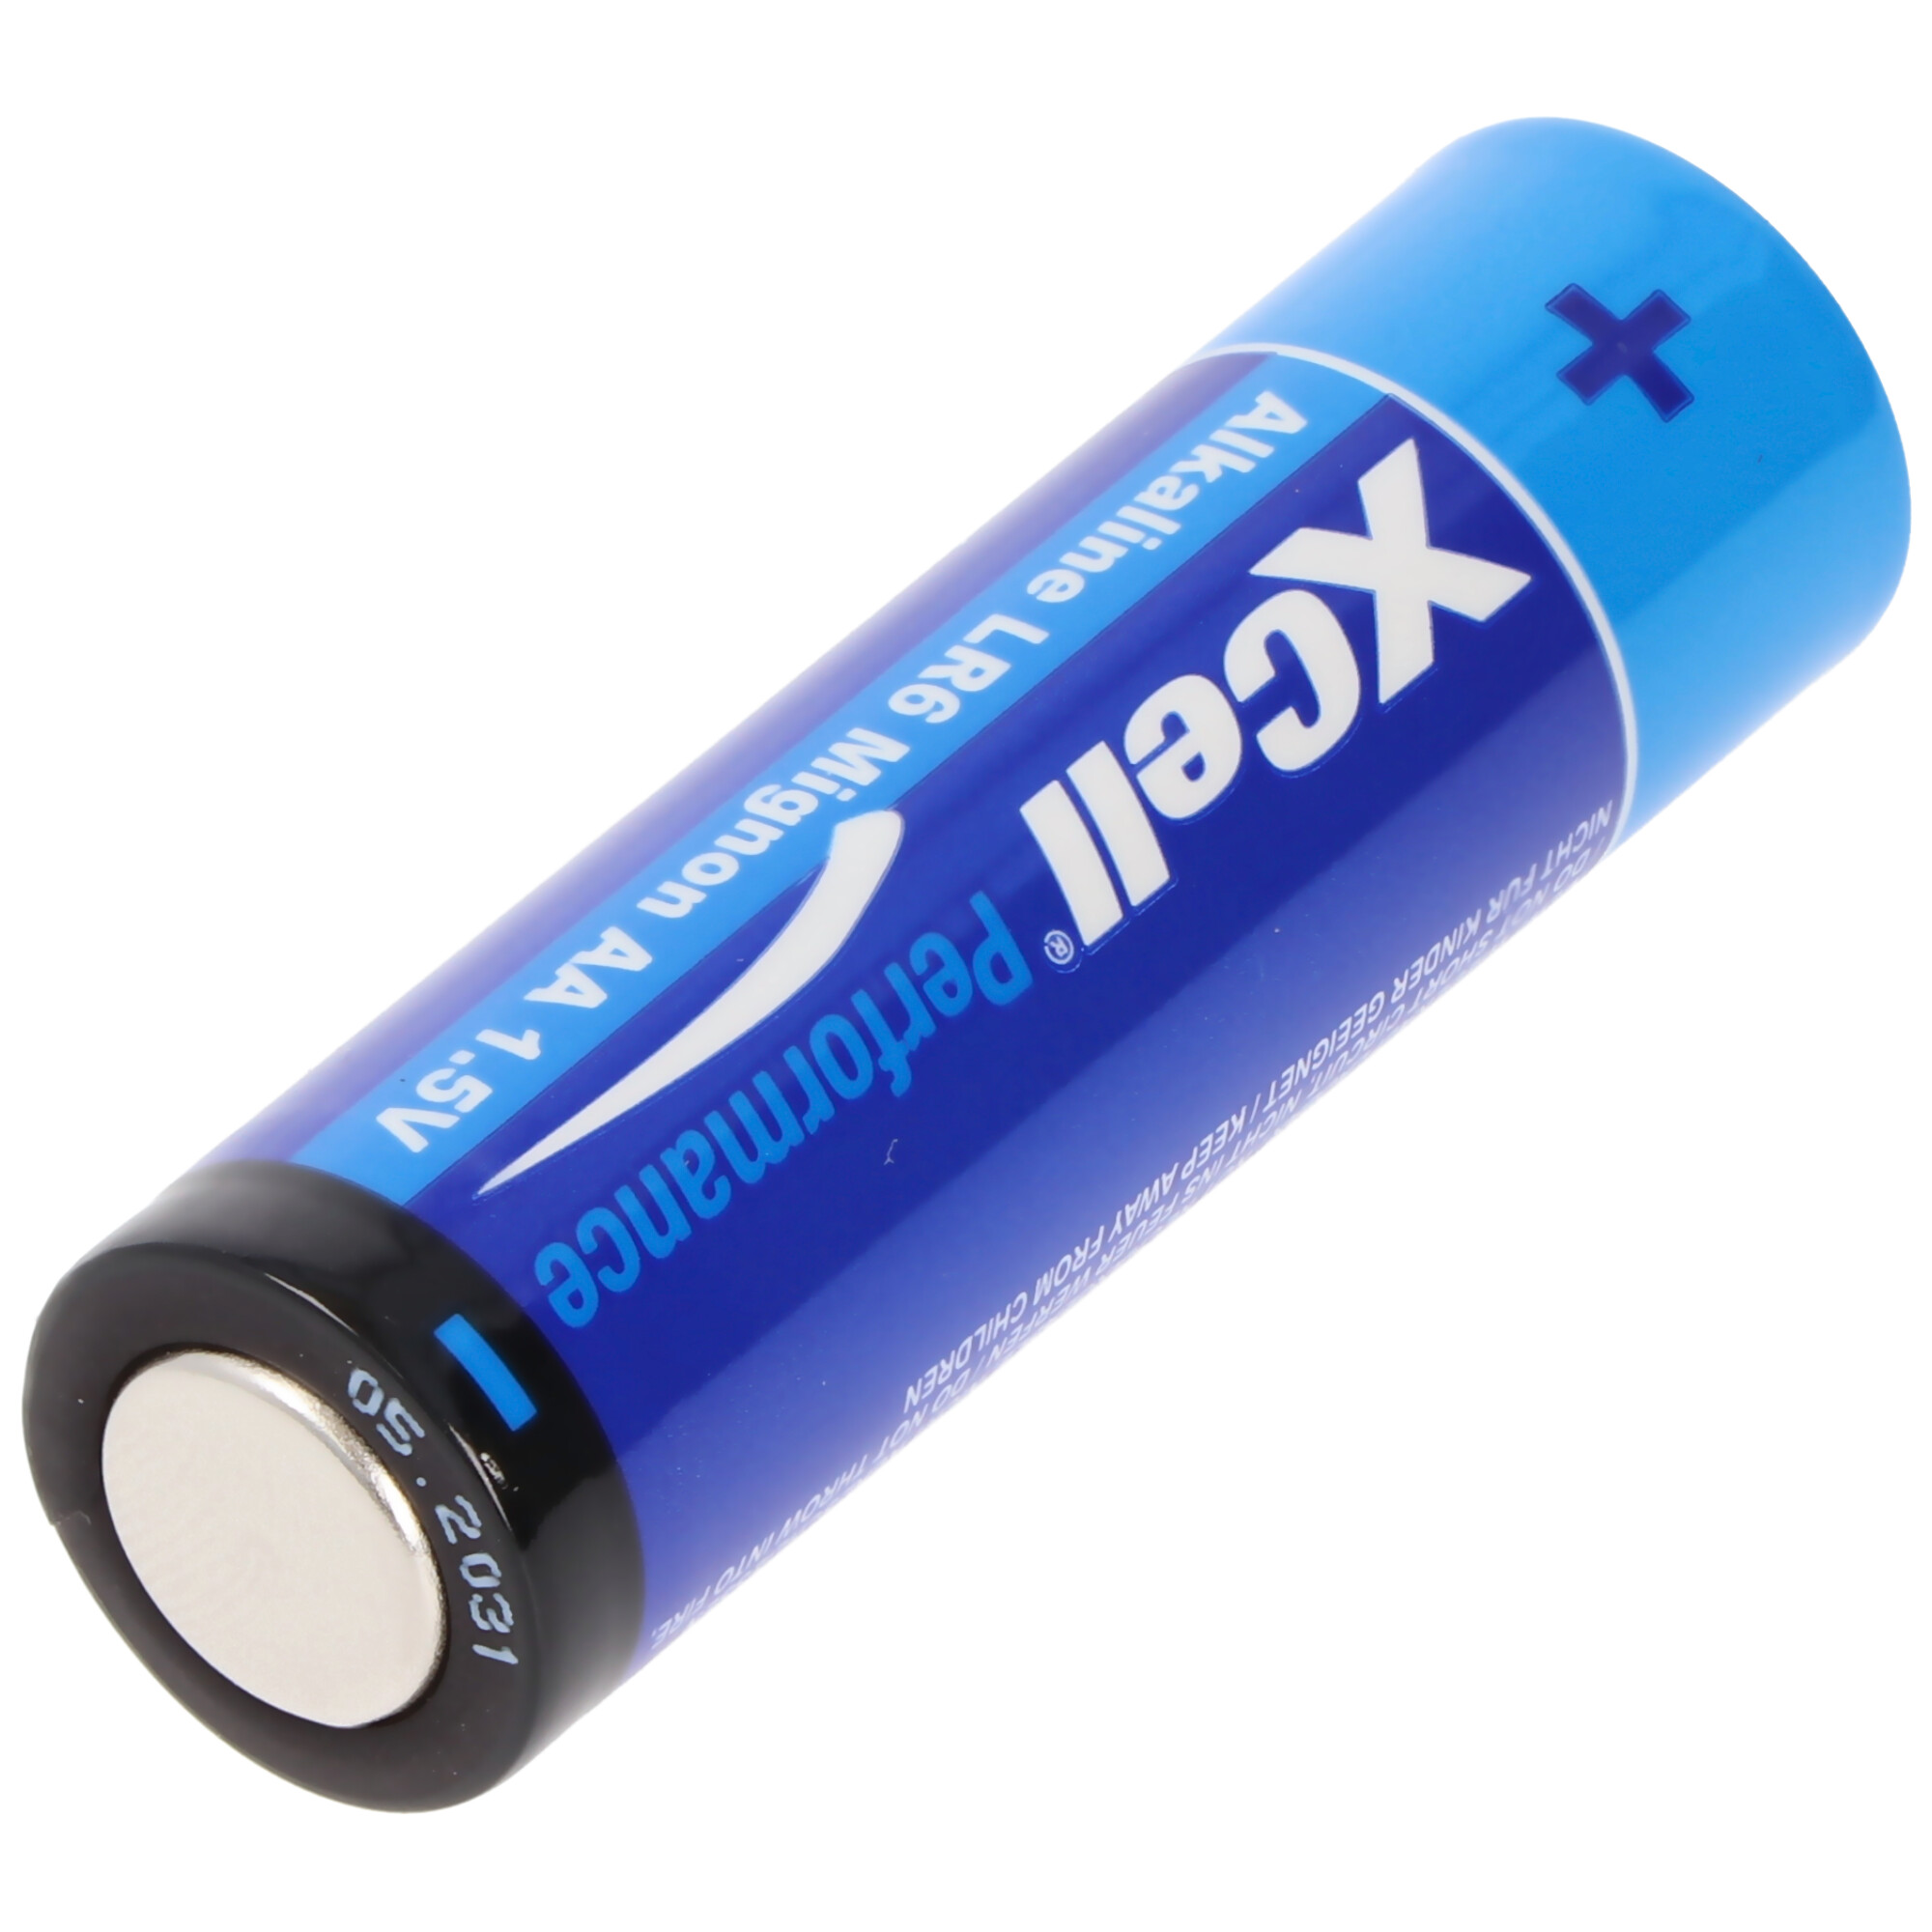 XCell Batterie Alkaline Mignon, AA, LR6, umweltfreundliche Verpackung, 4er Blister